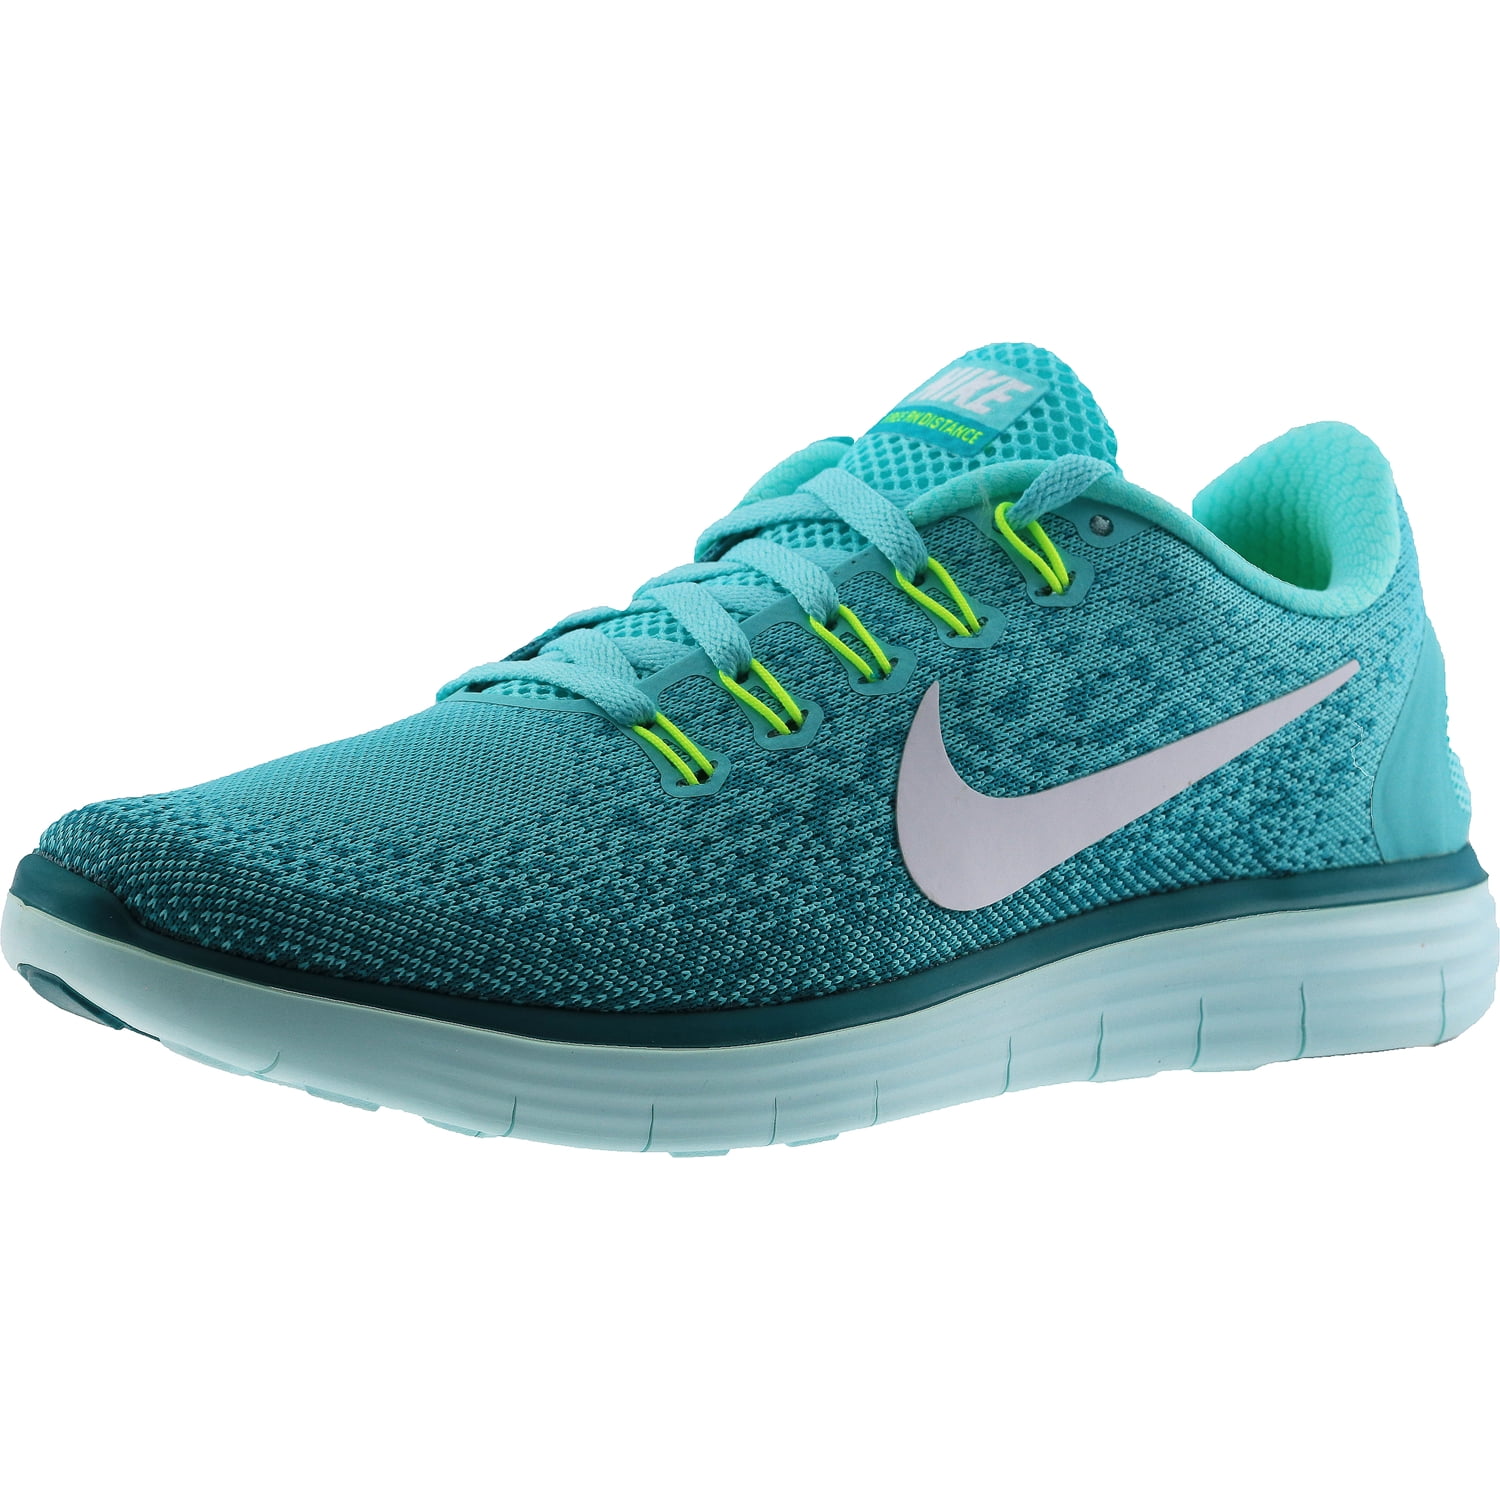 Nike Women's Free Rn Distance Hyper Turquoise / White-Hyper Jade Ankle ...